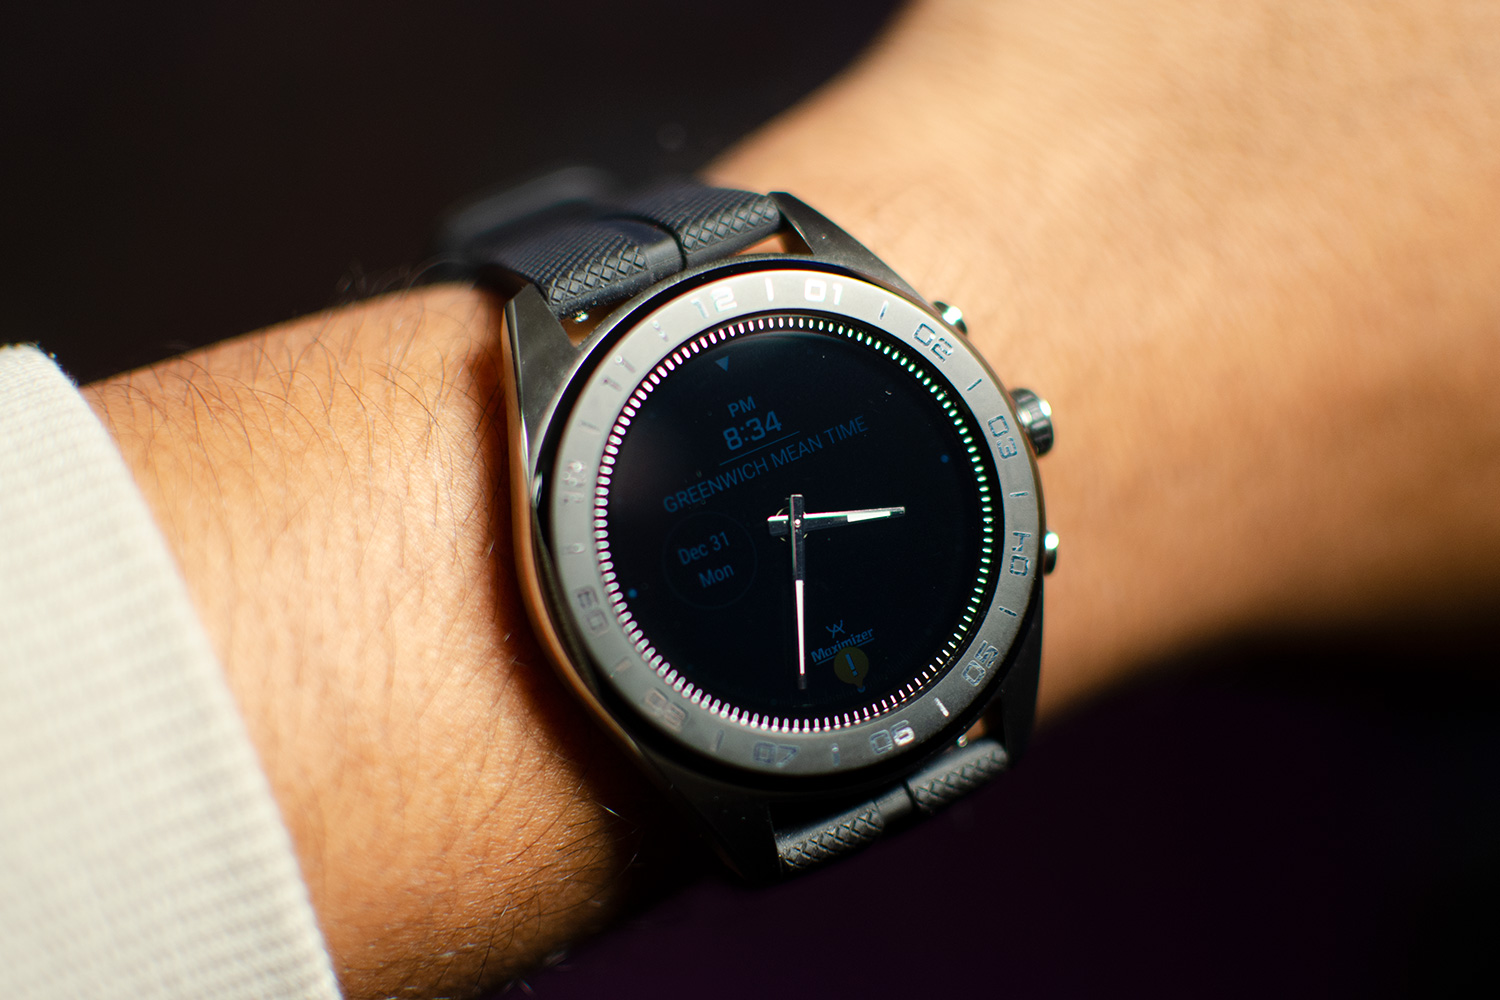 Lg Watch Smart Watches : Target